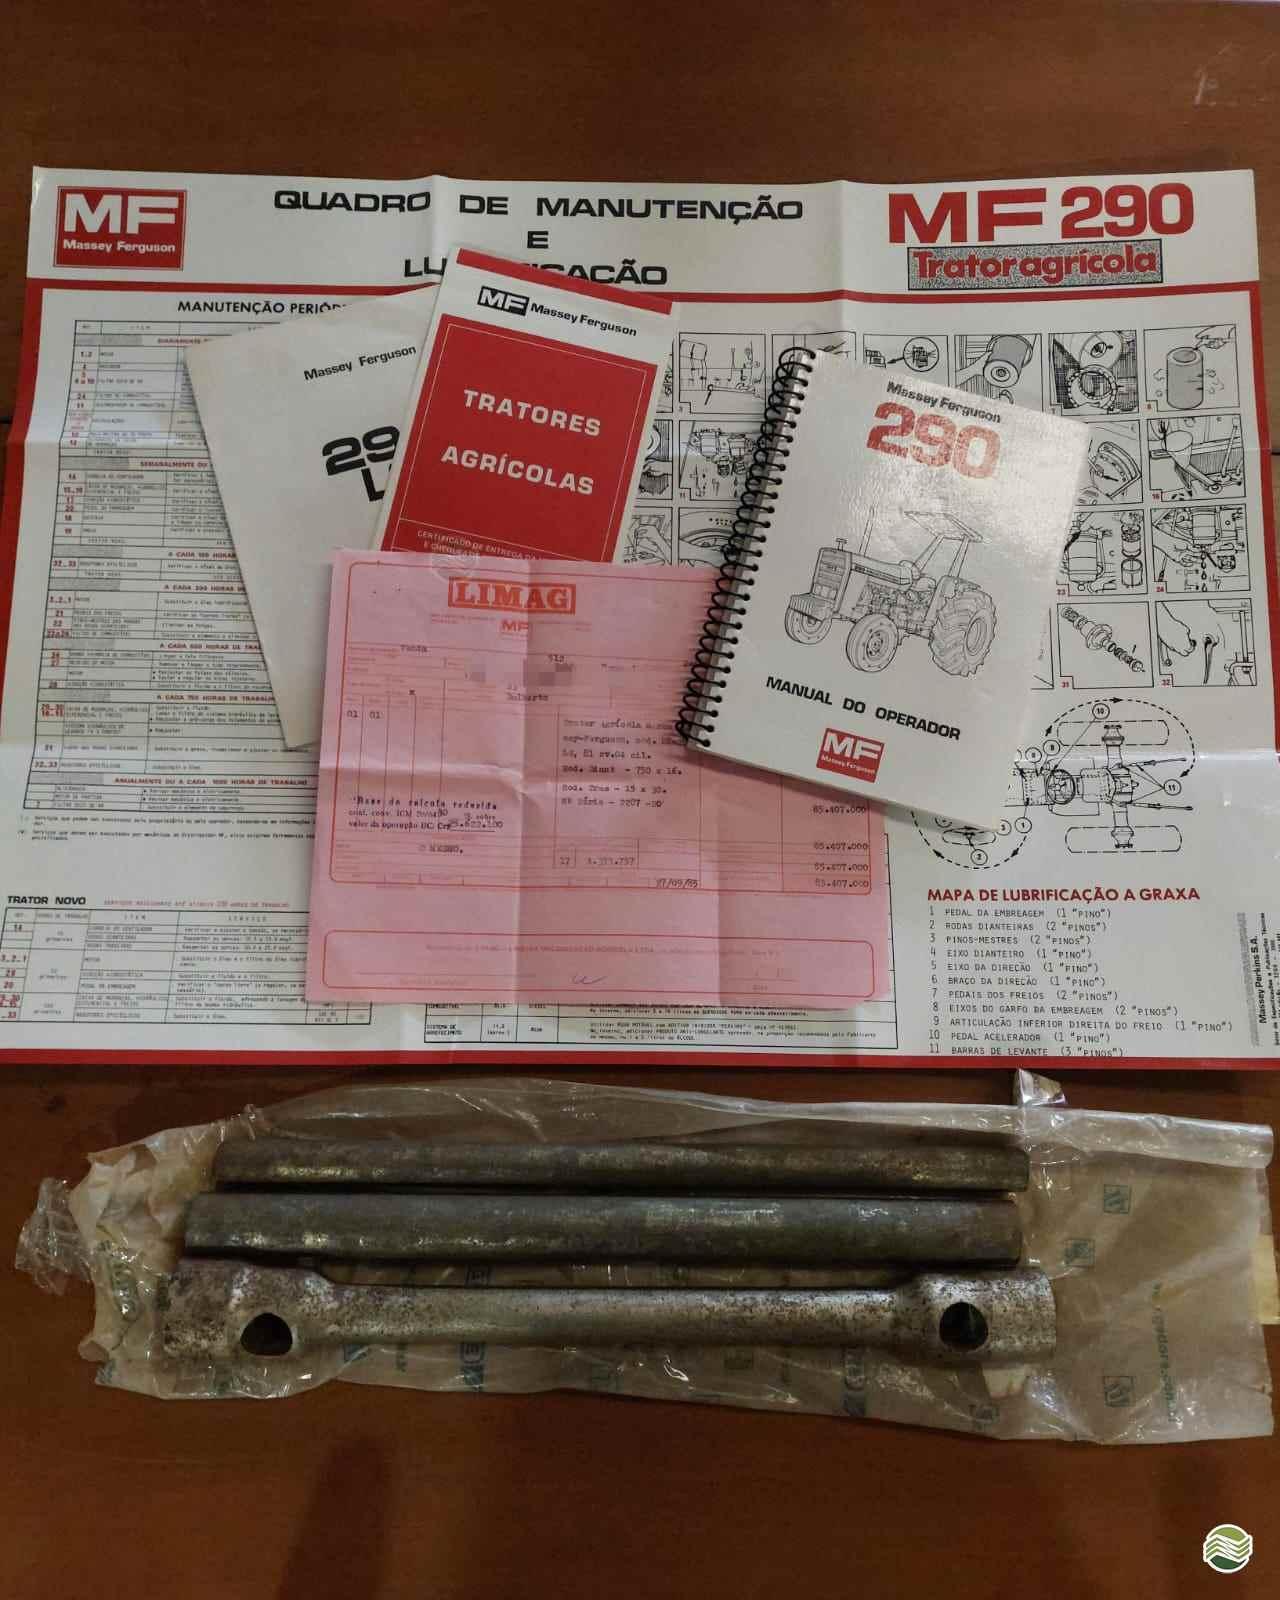 MF 290